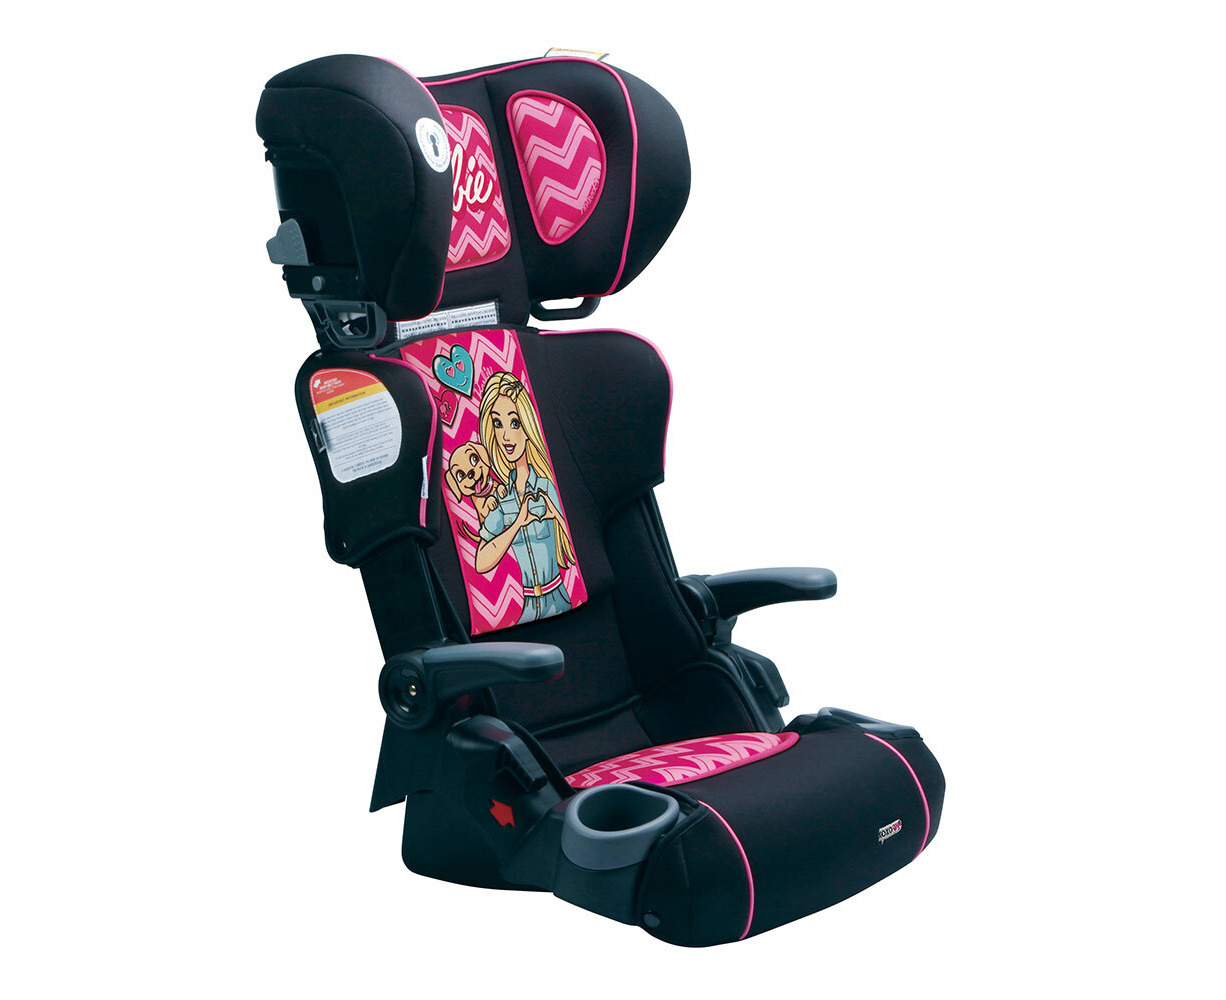 barbie car seat